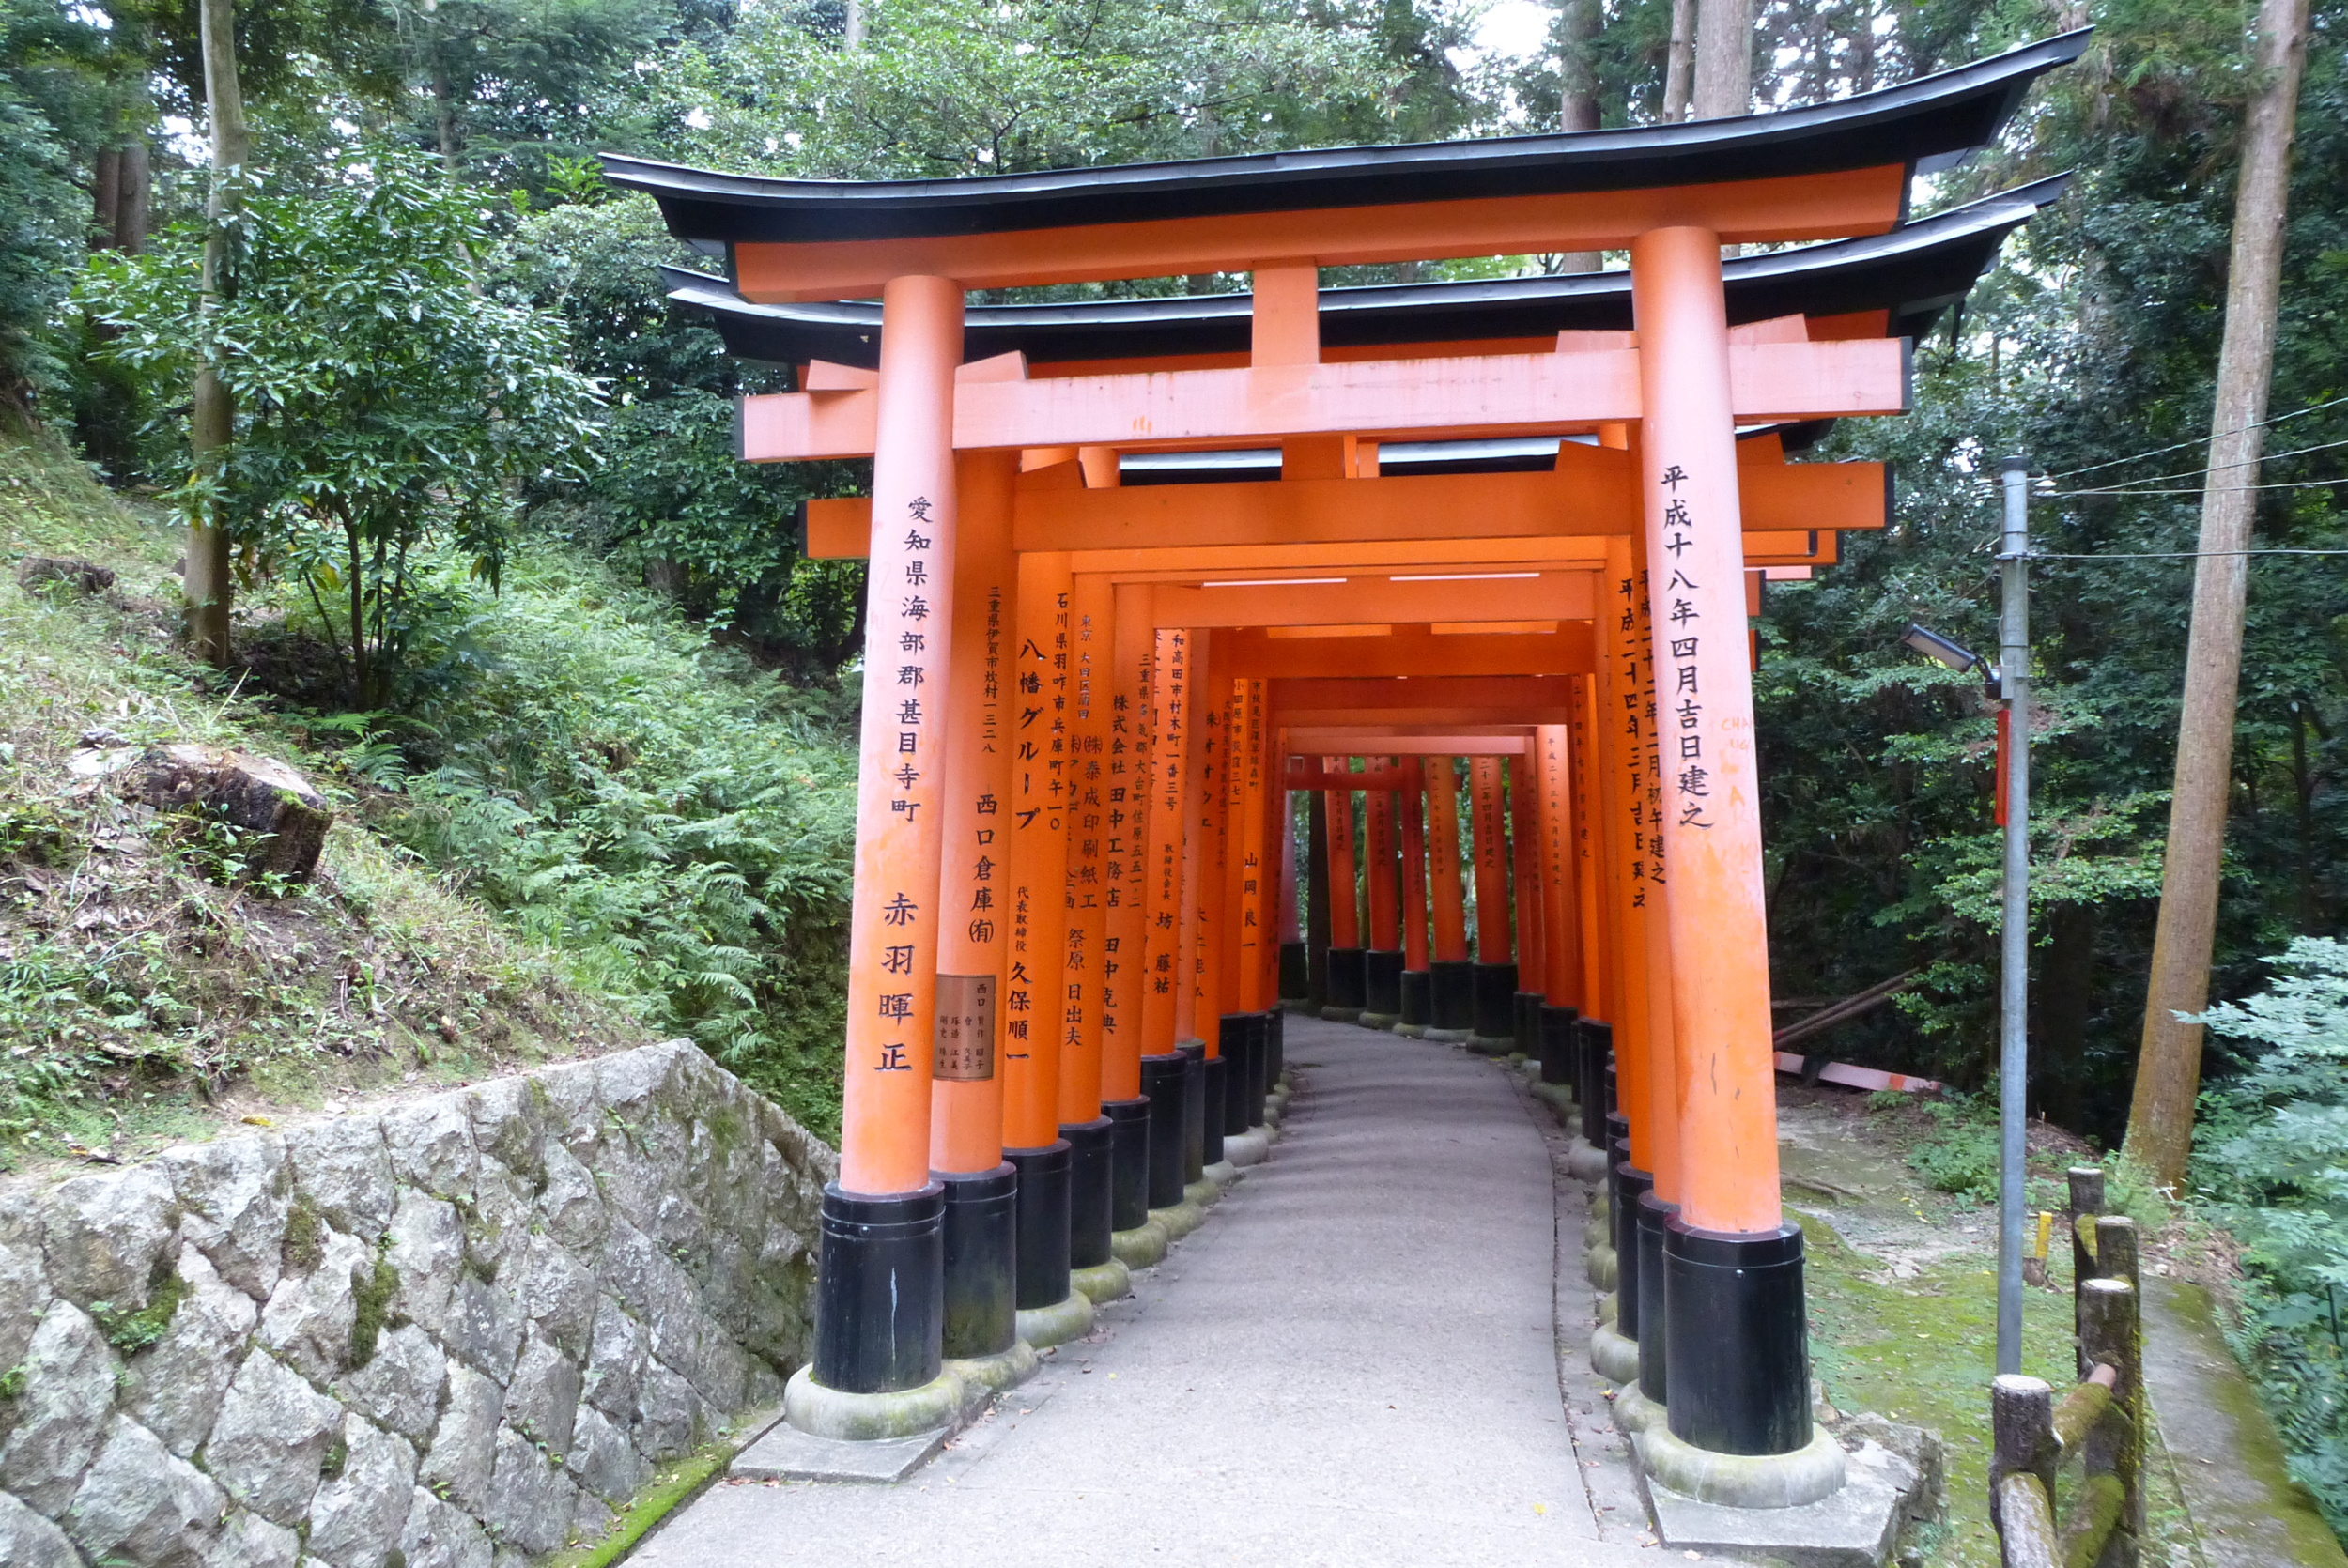 Torii gates at Fushimi Inari Taisha Shrine